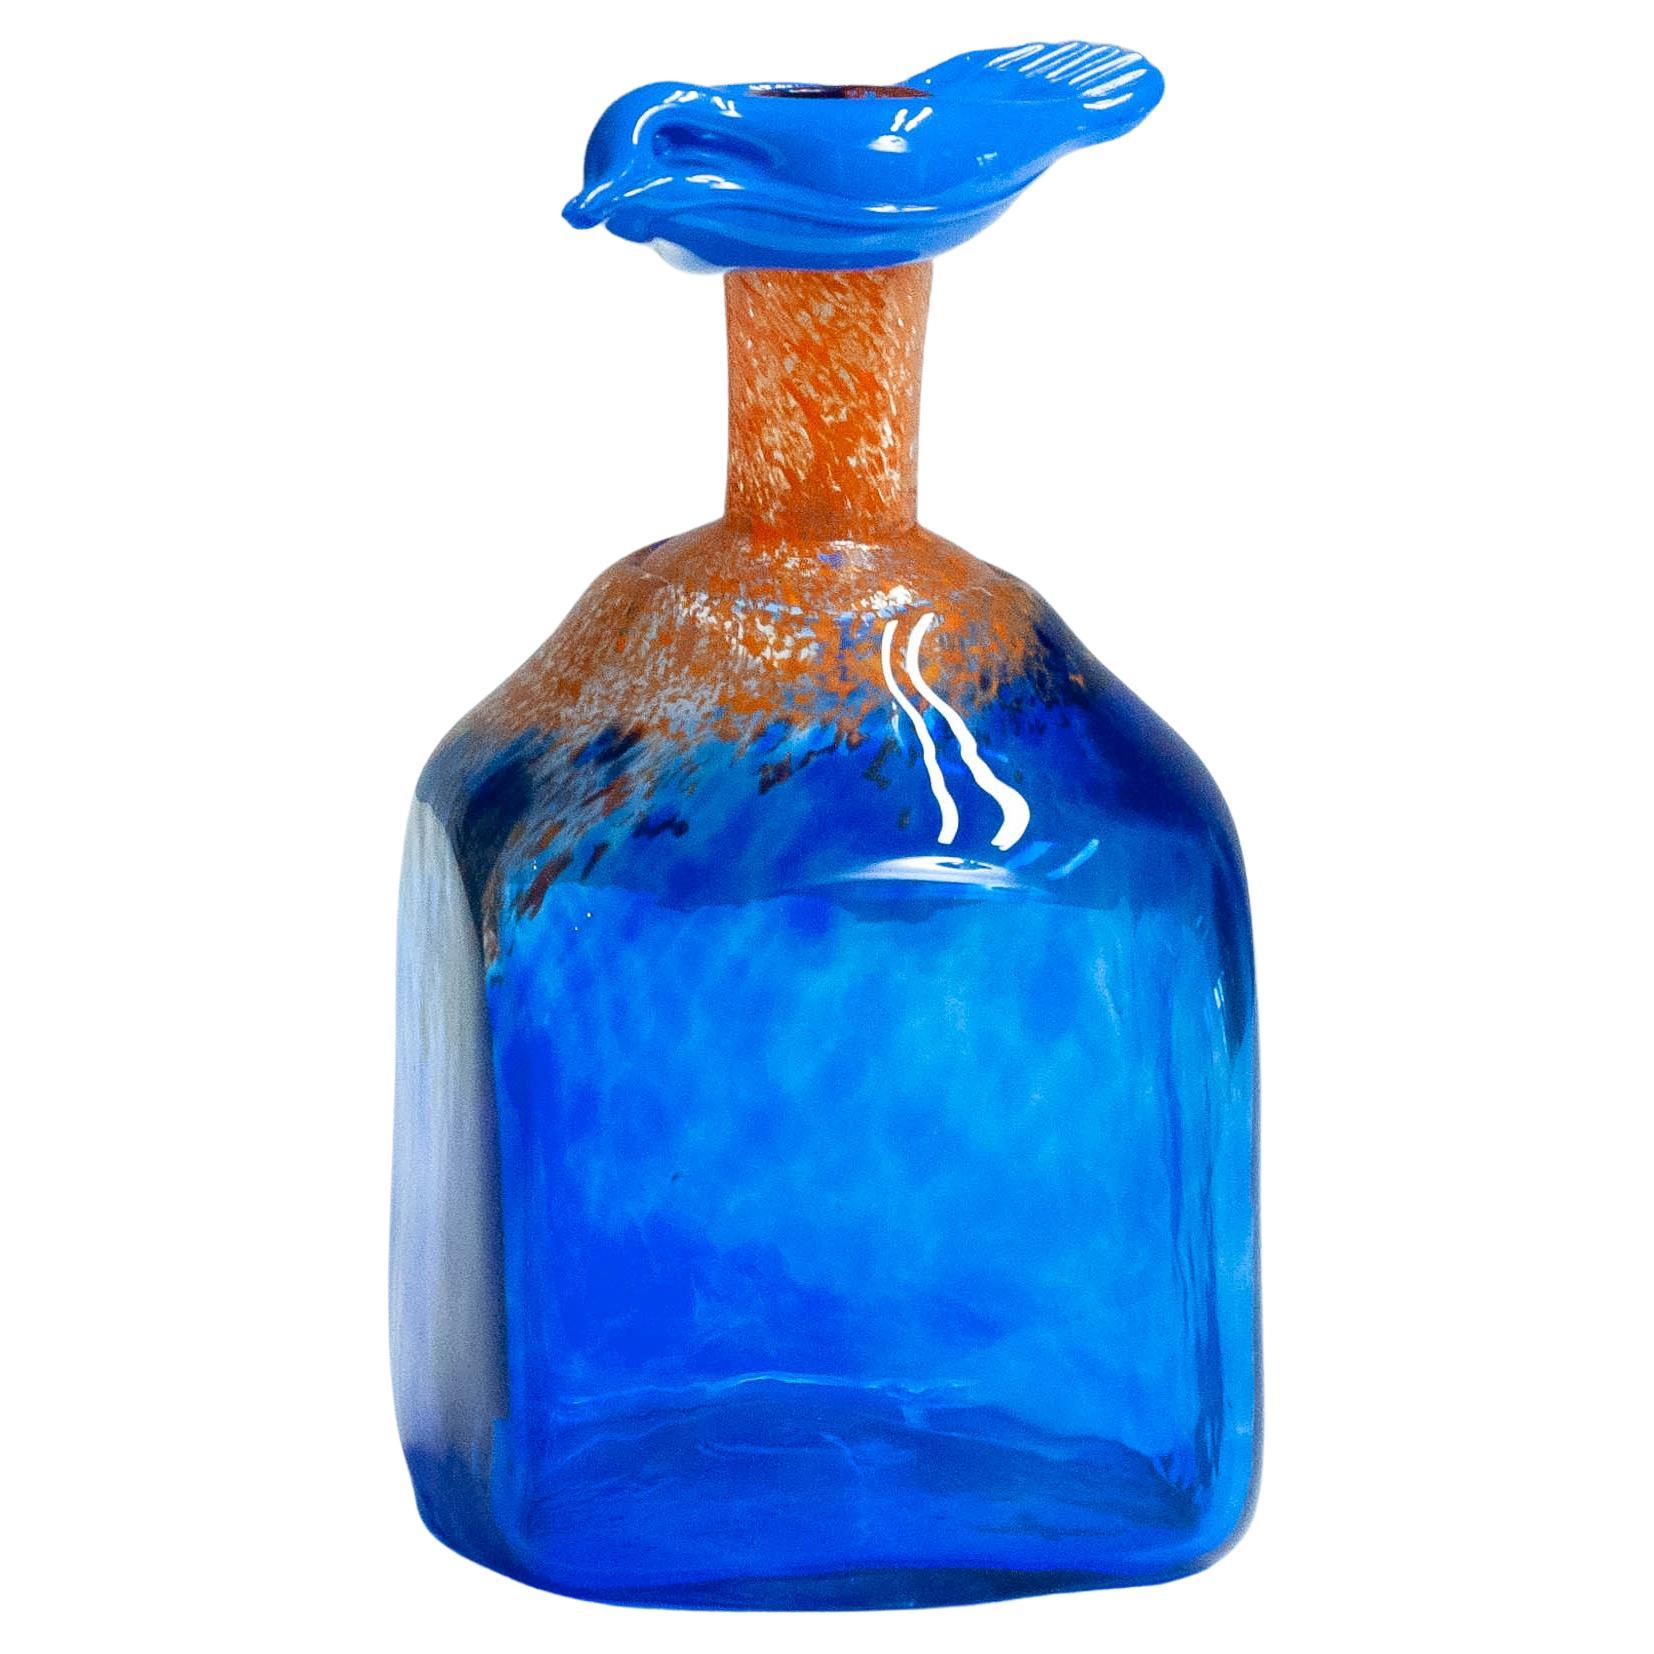 1980s Blue Art Glass Bottle Handmade by Staffan Gellerstedt at Studio Glashyttan For Sale